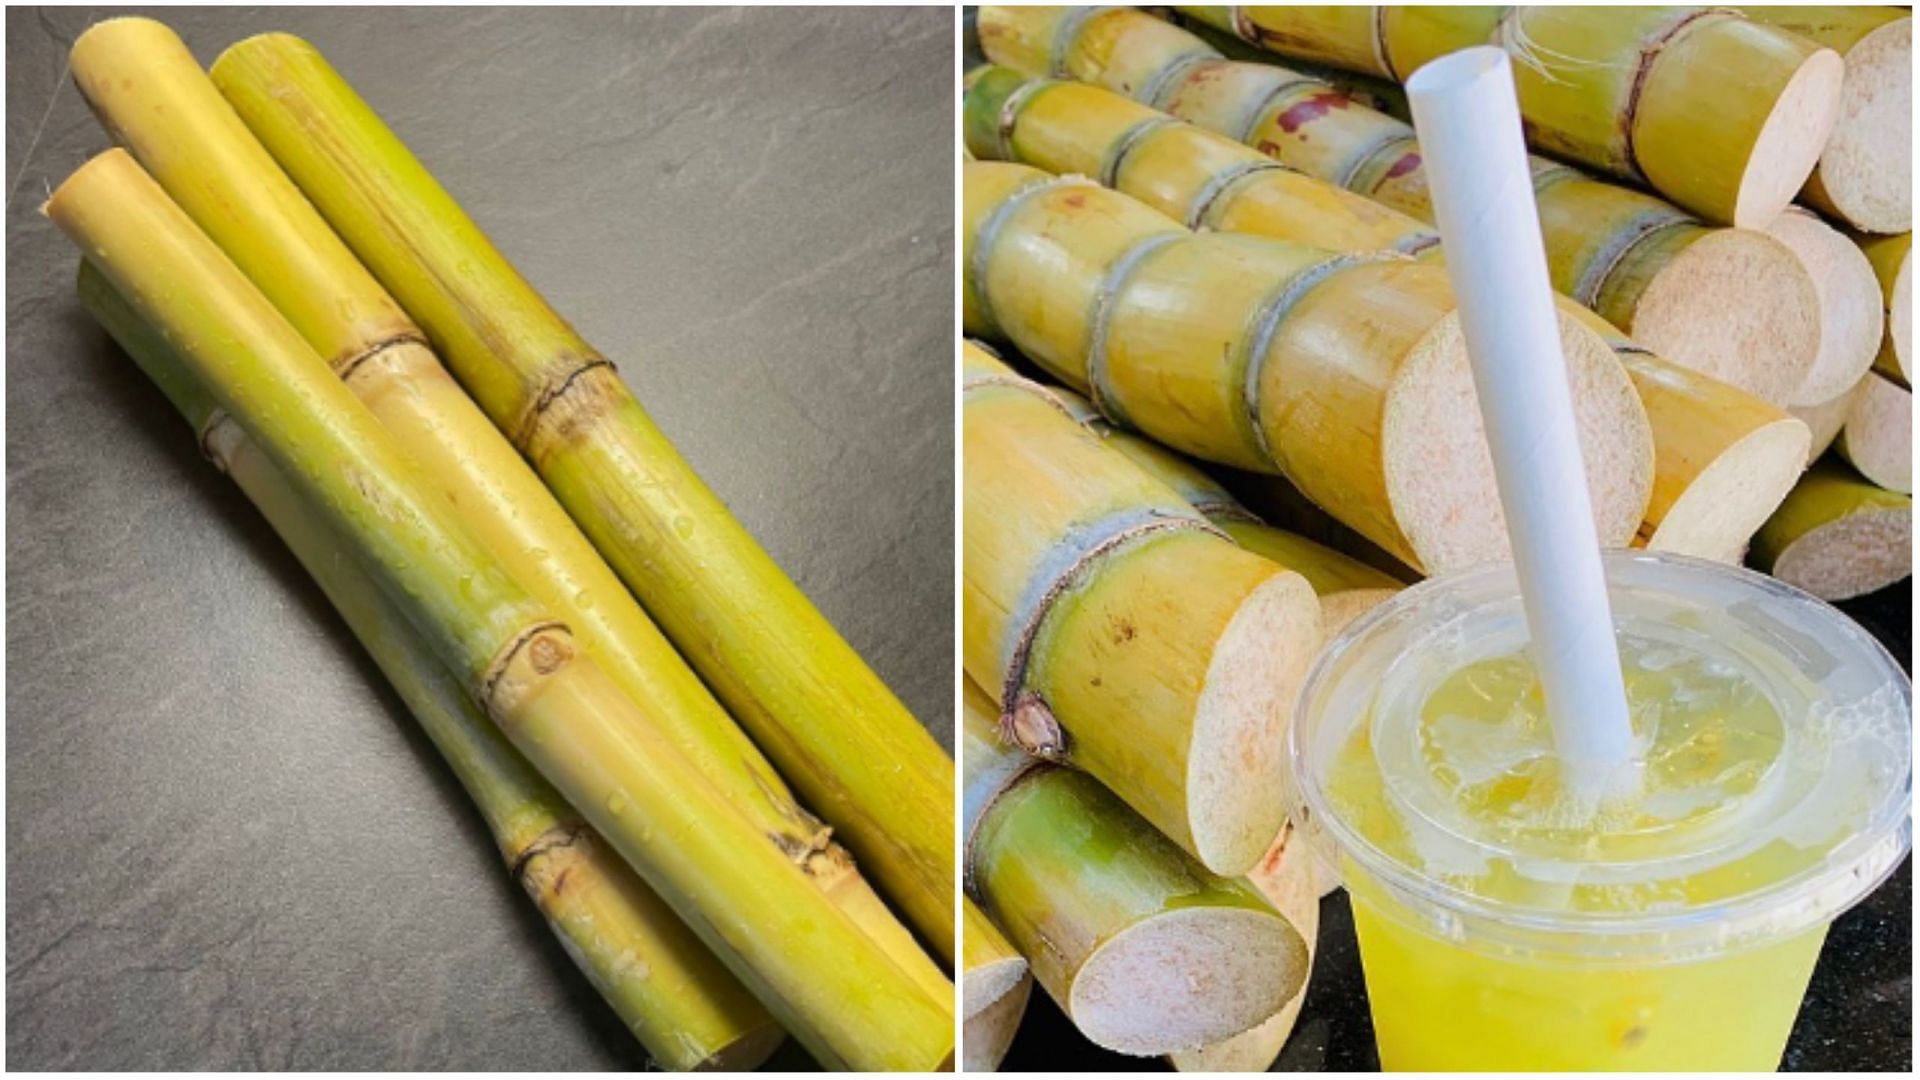 Sugarcane is one of the most underrated superfood. (Image via Instagram @ayahawaiilife / @brascane_sugarcane)